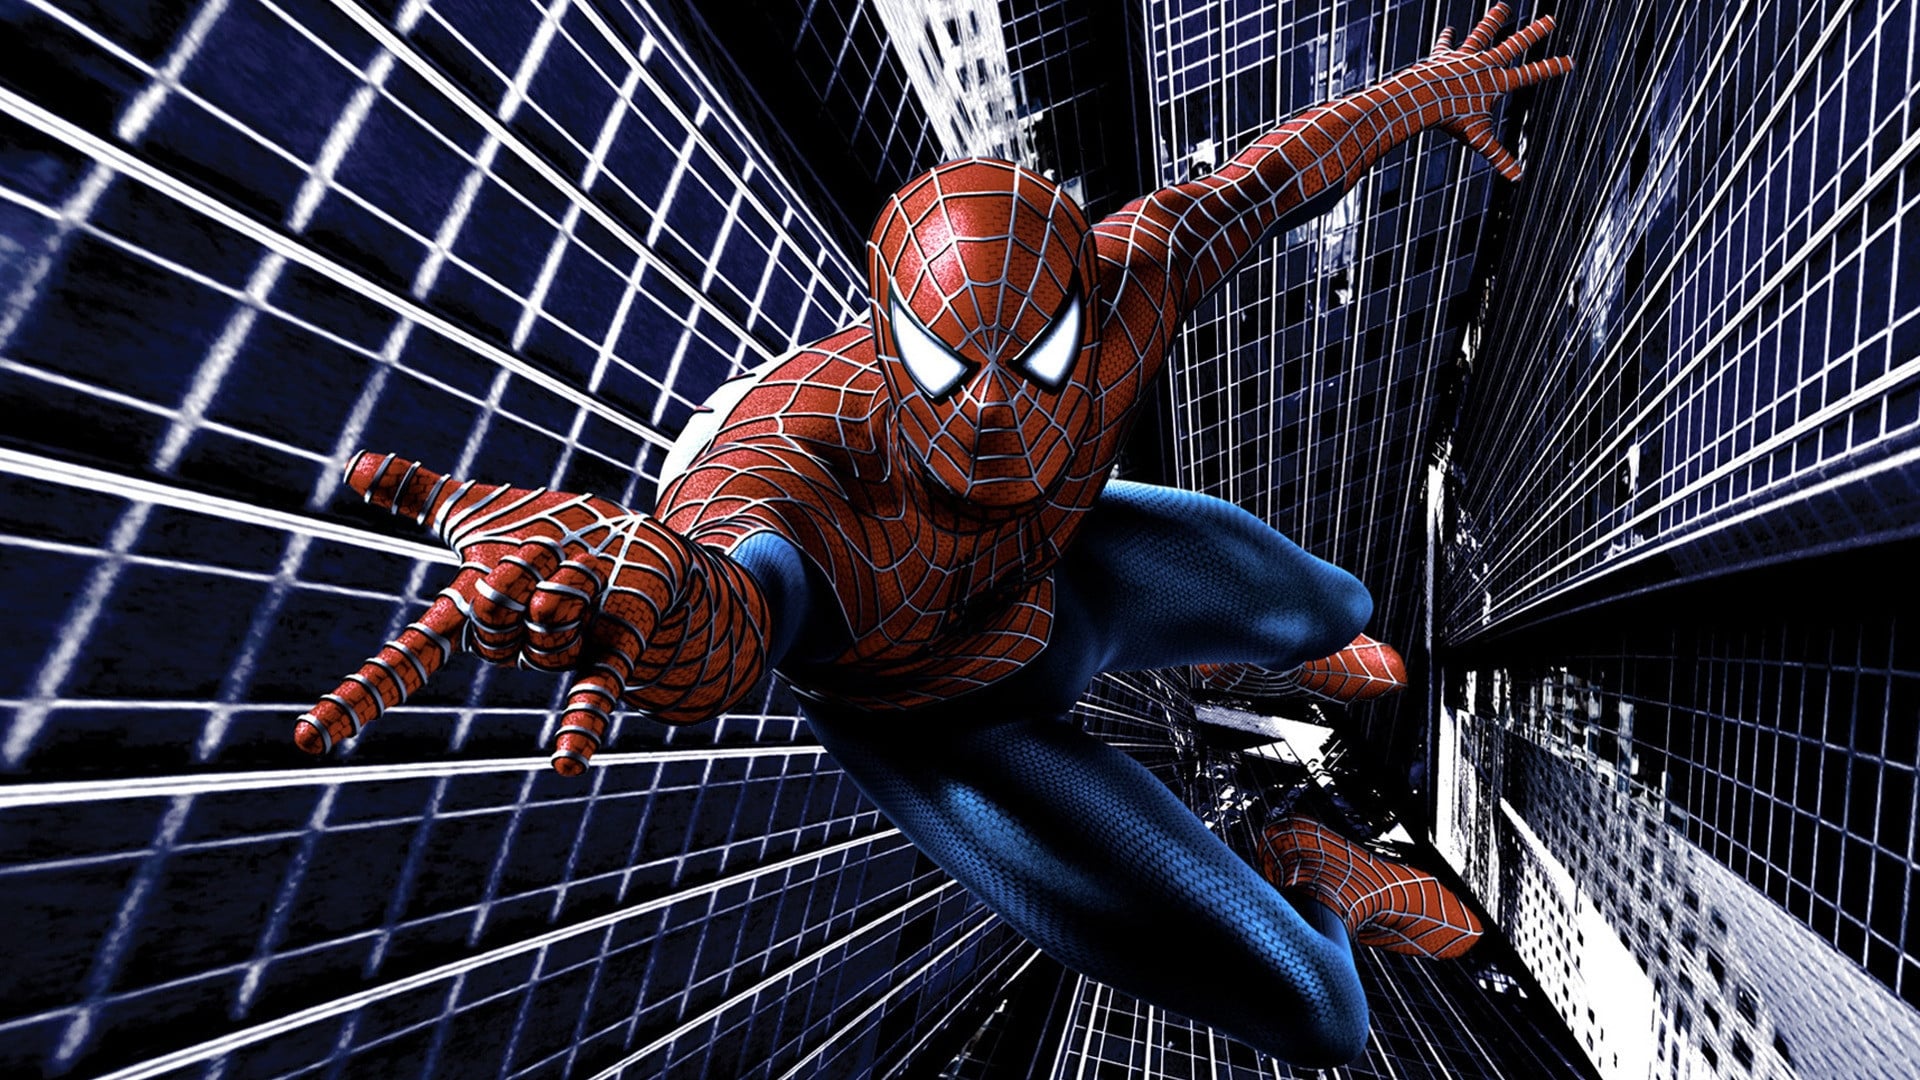 Image du film Spider-Man 82mbw0pvu61ehjopleulqfnib0jjpg